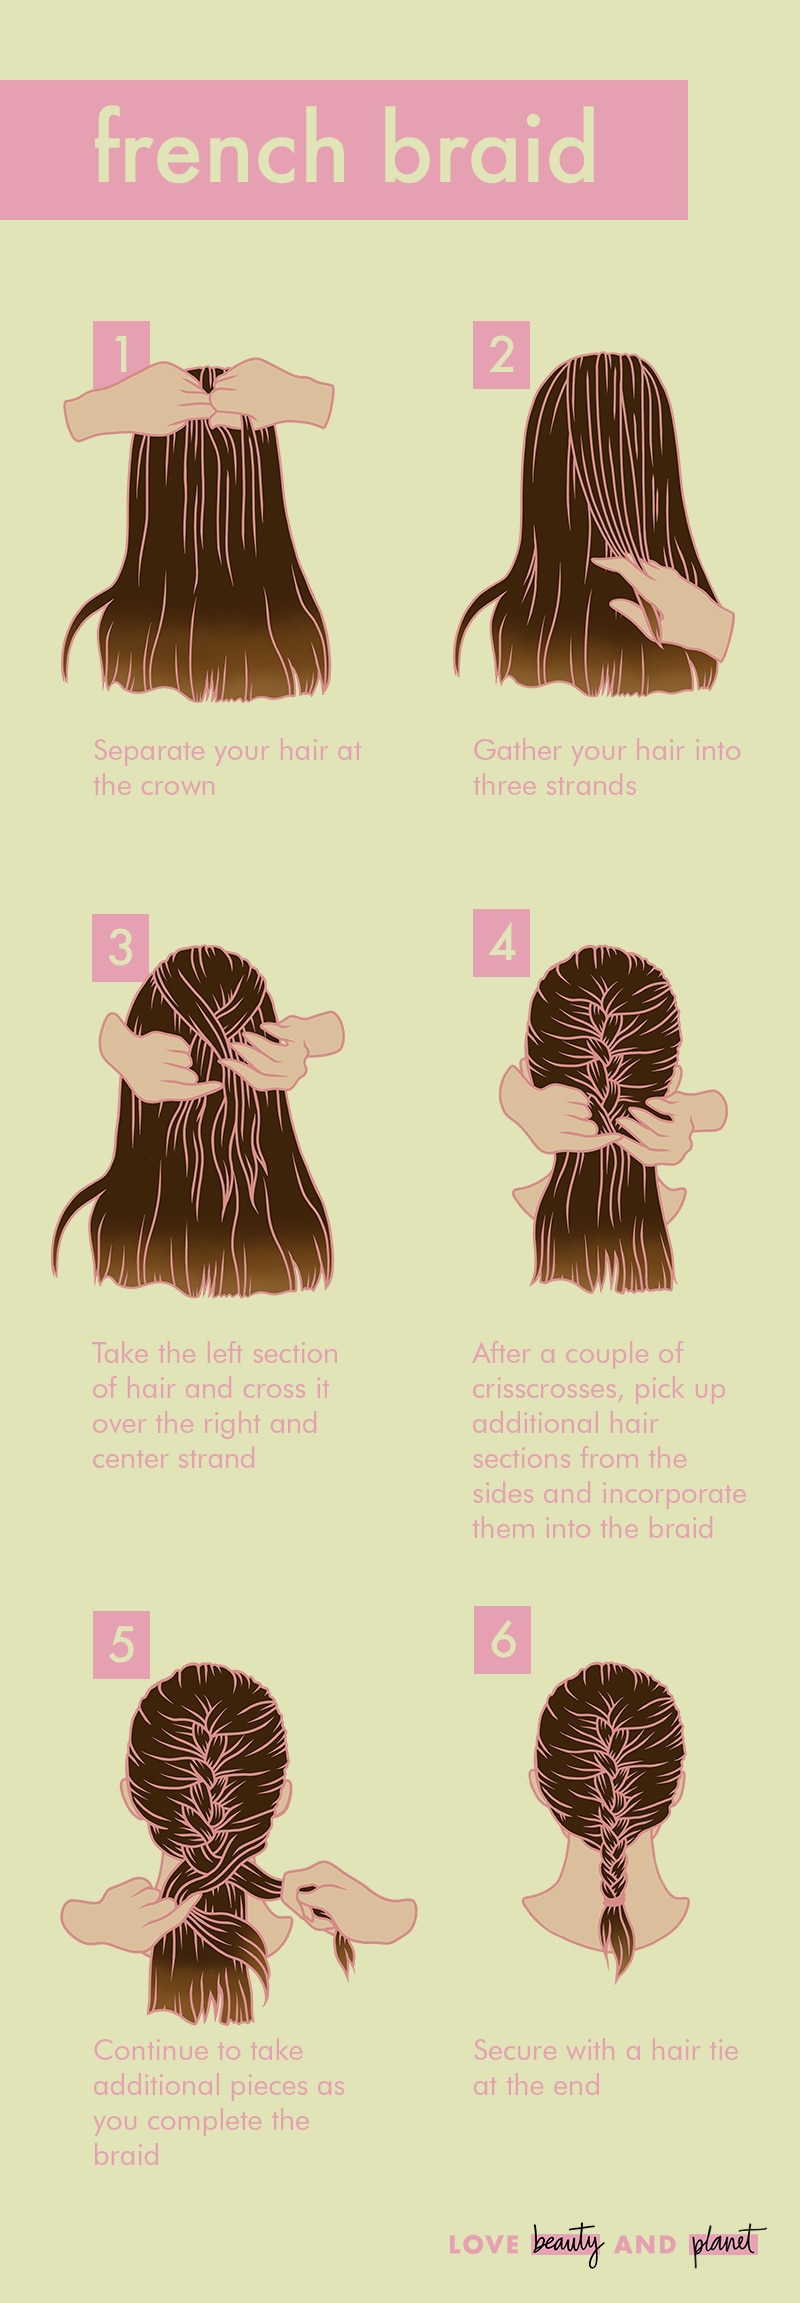 French braid step-by-step illustration